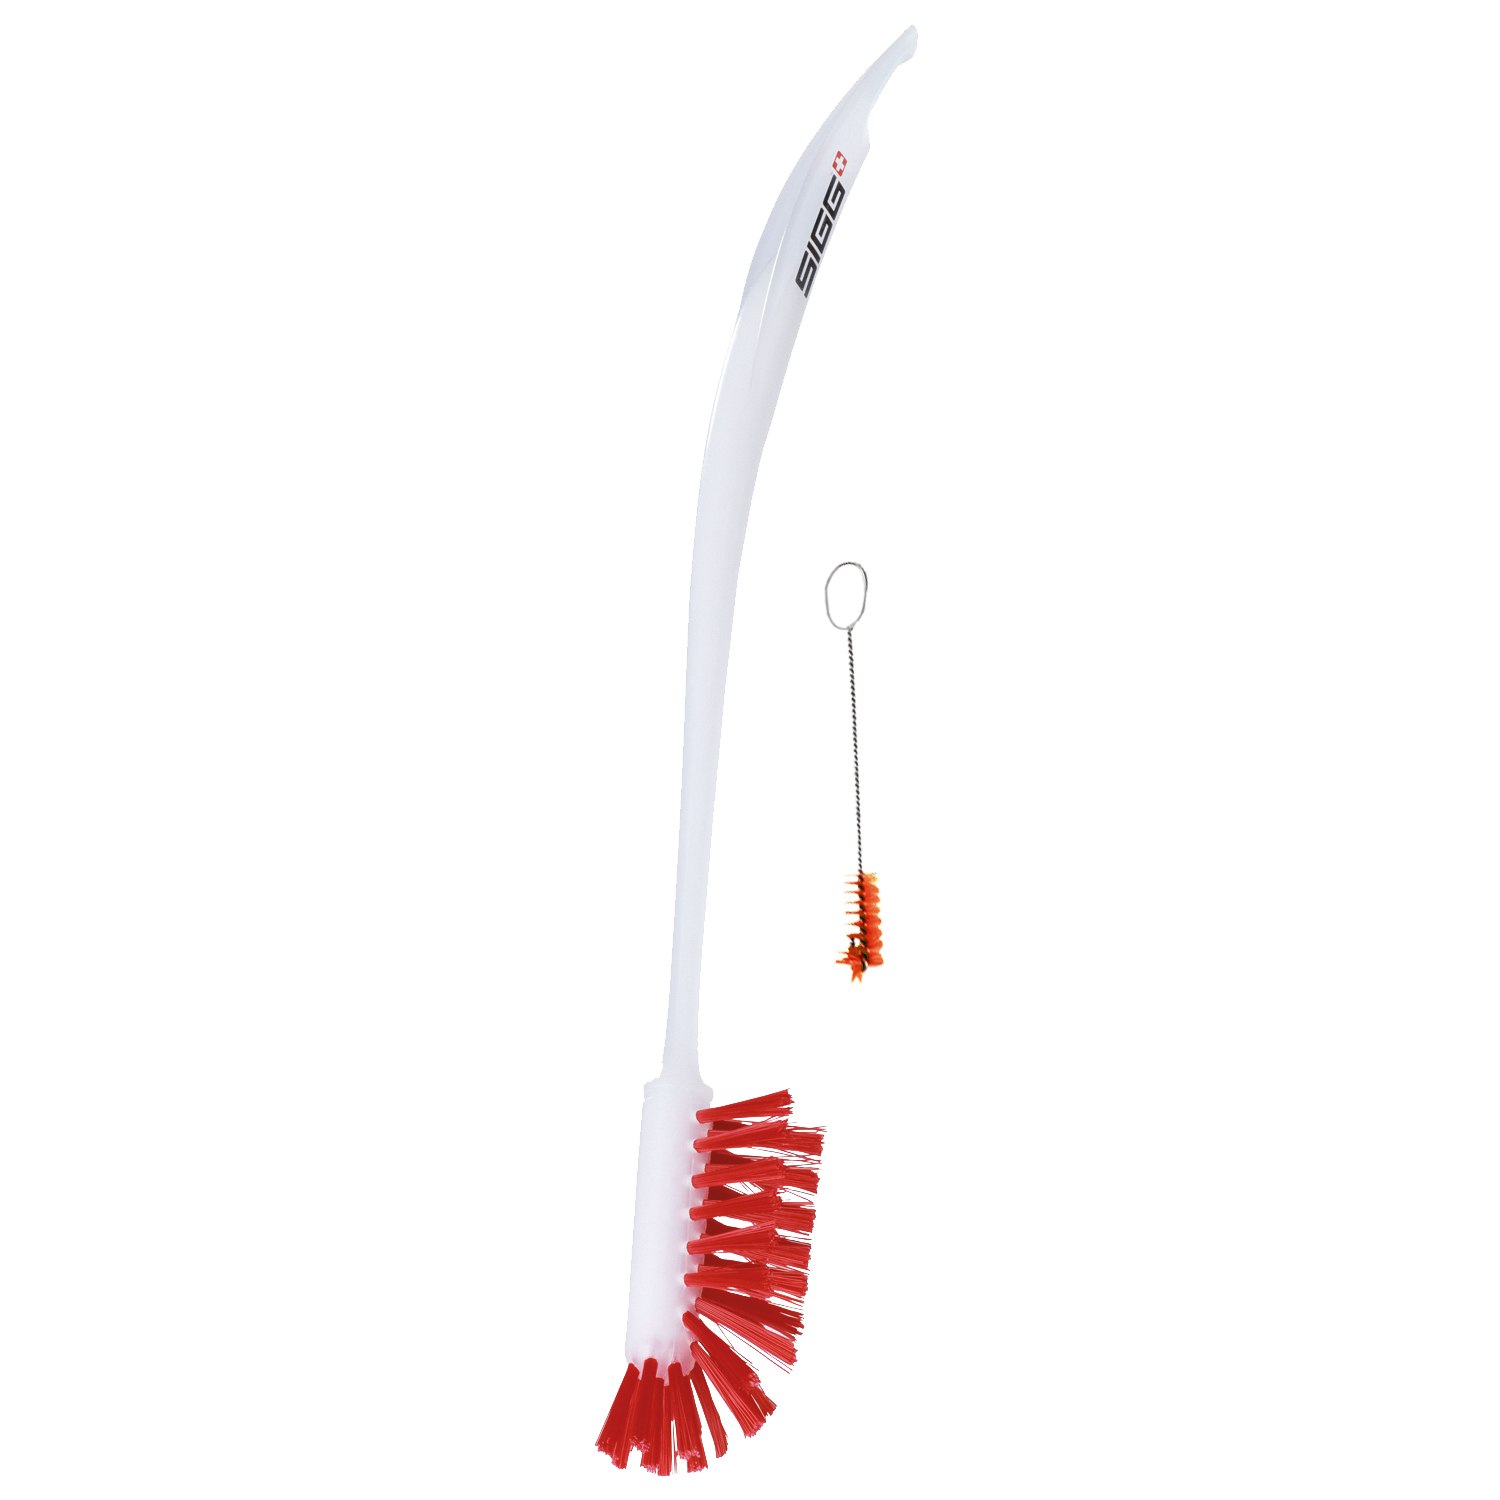 Productfoto van SIGG Cleaning Brush